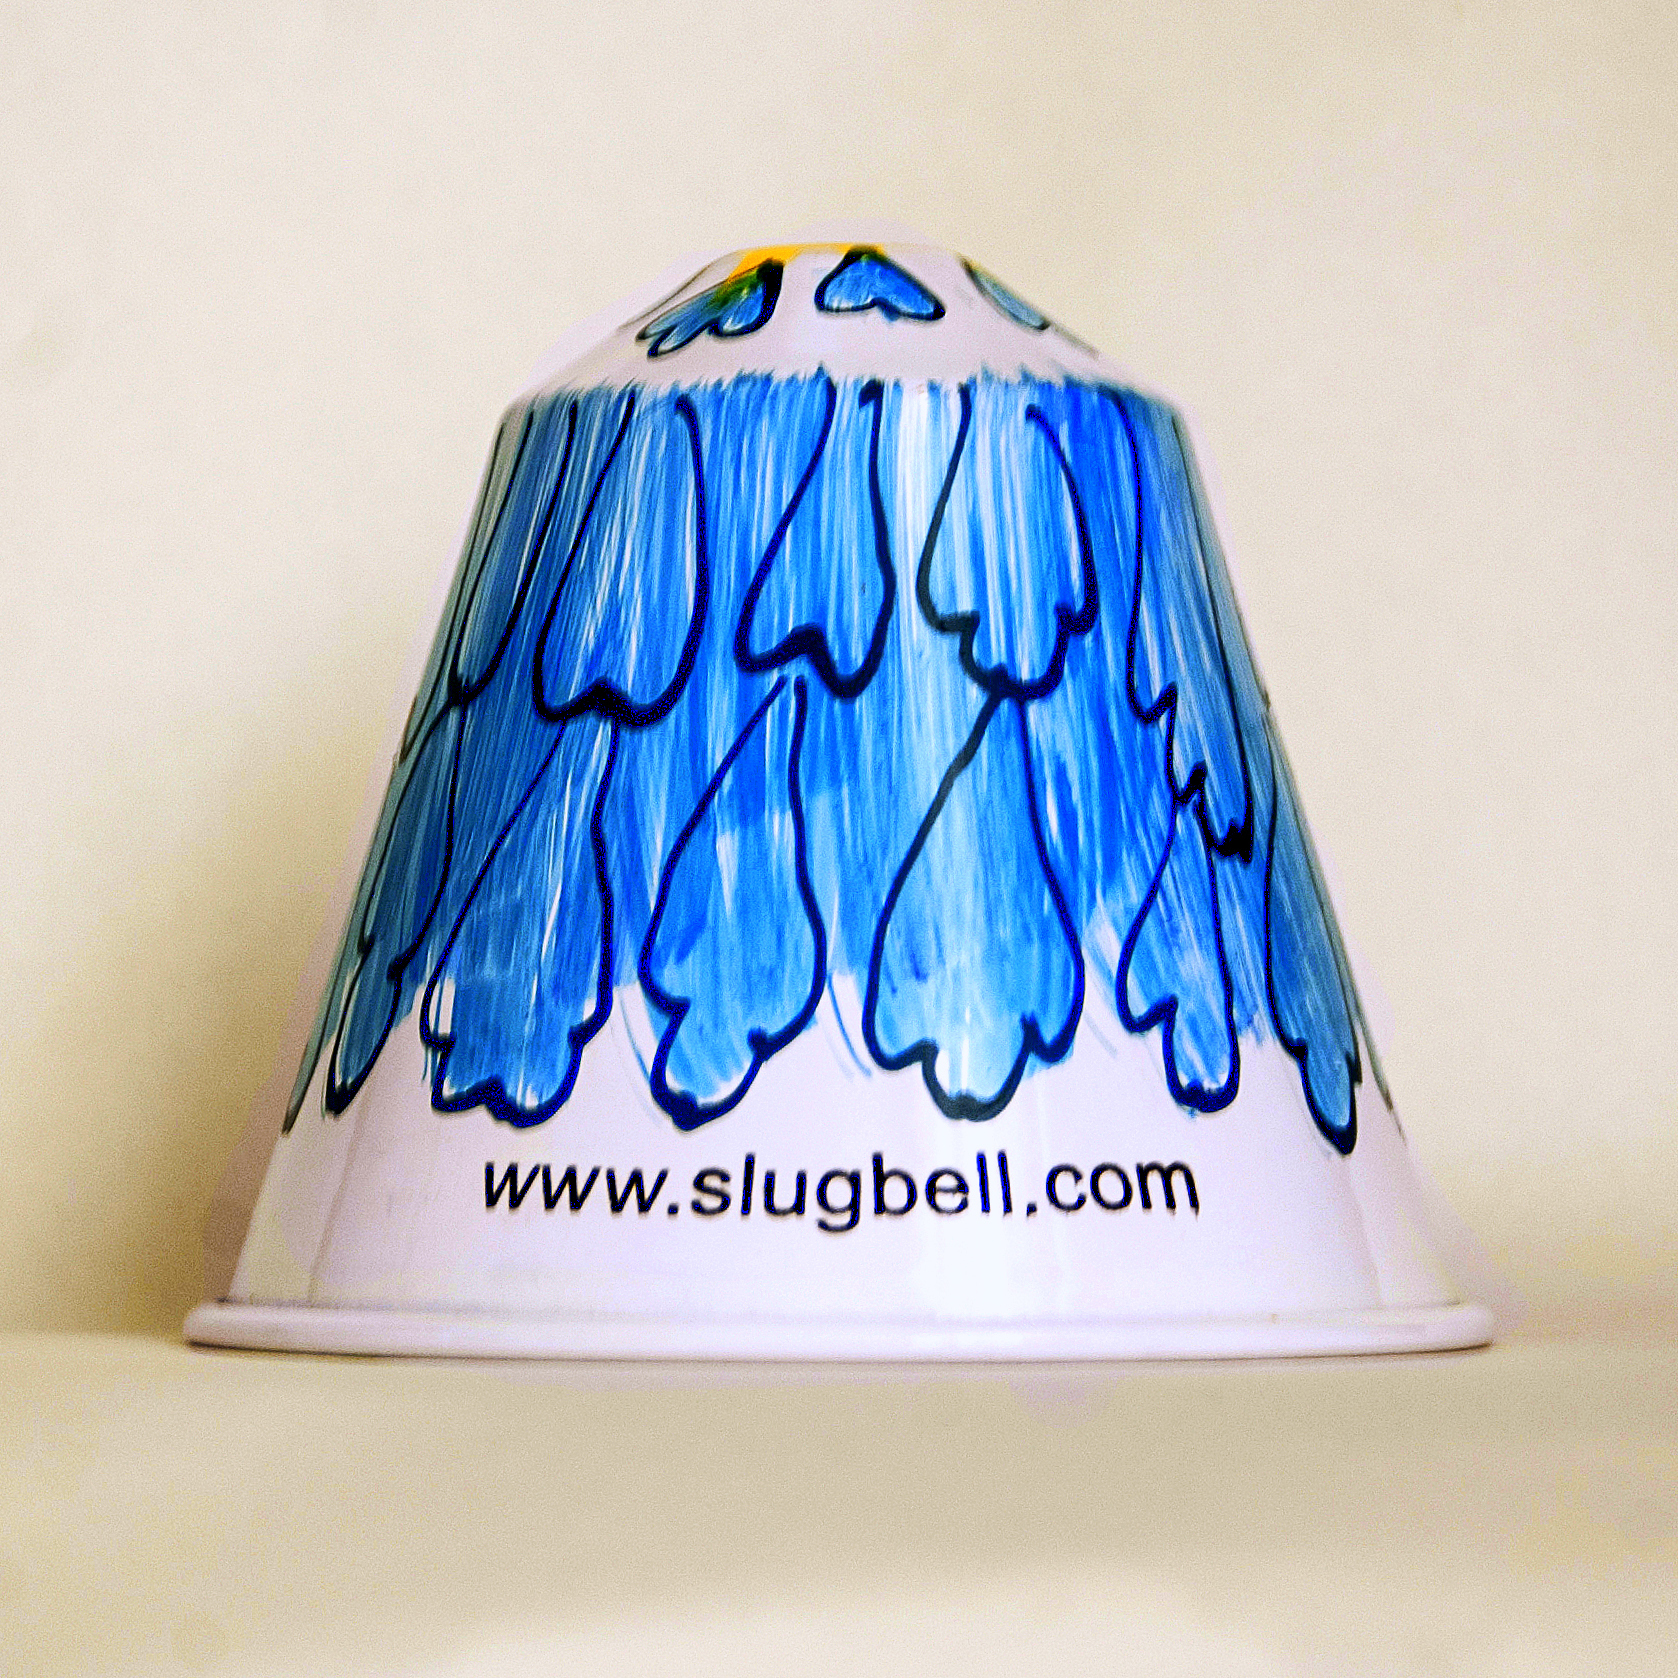 Slug Bell - Pot small